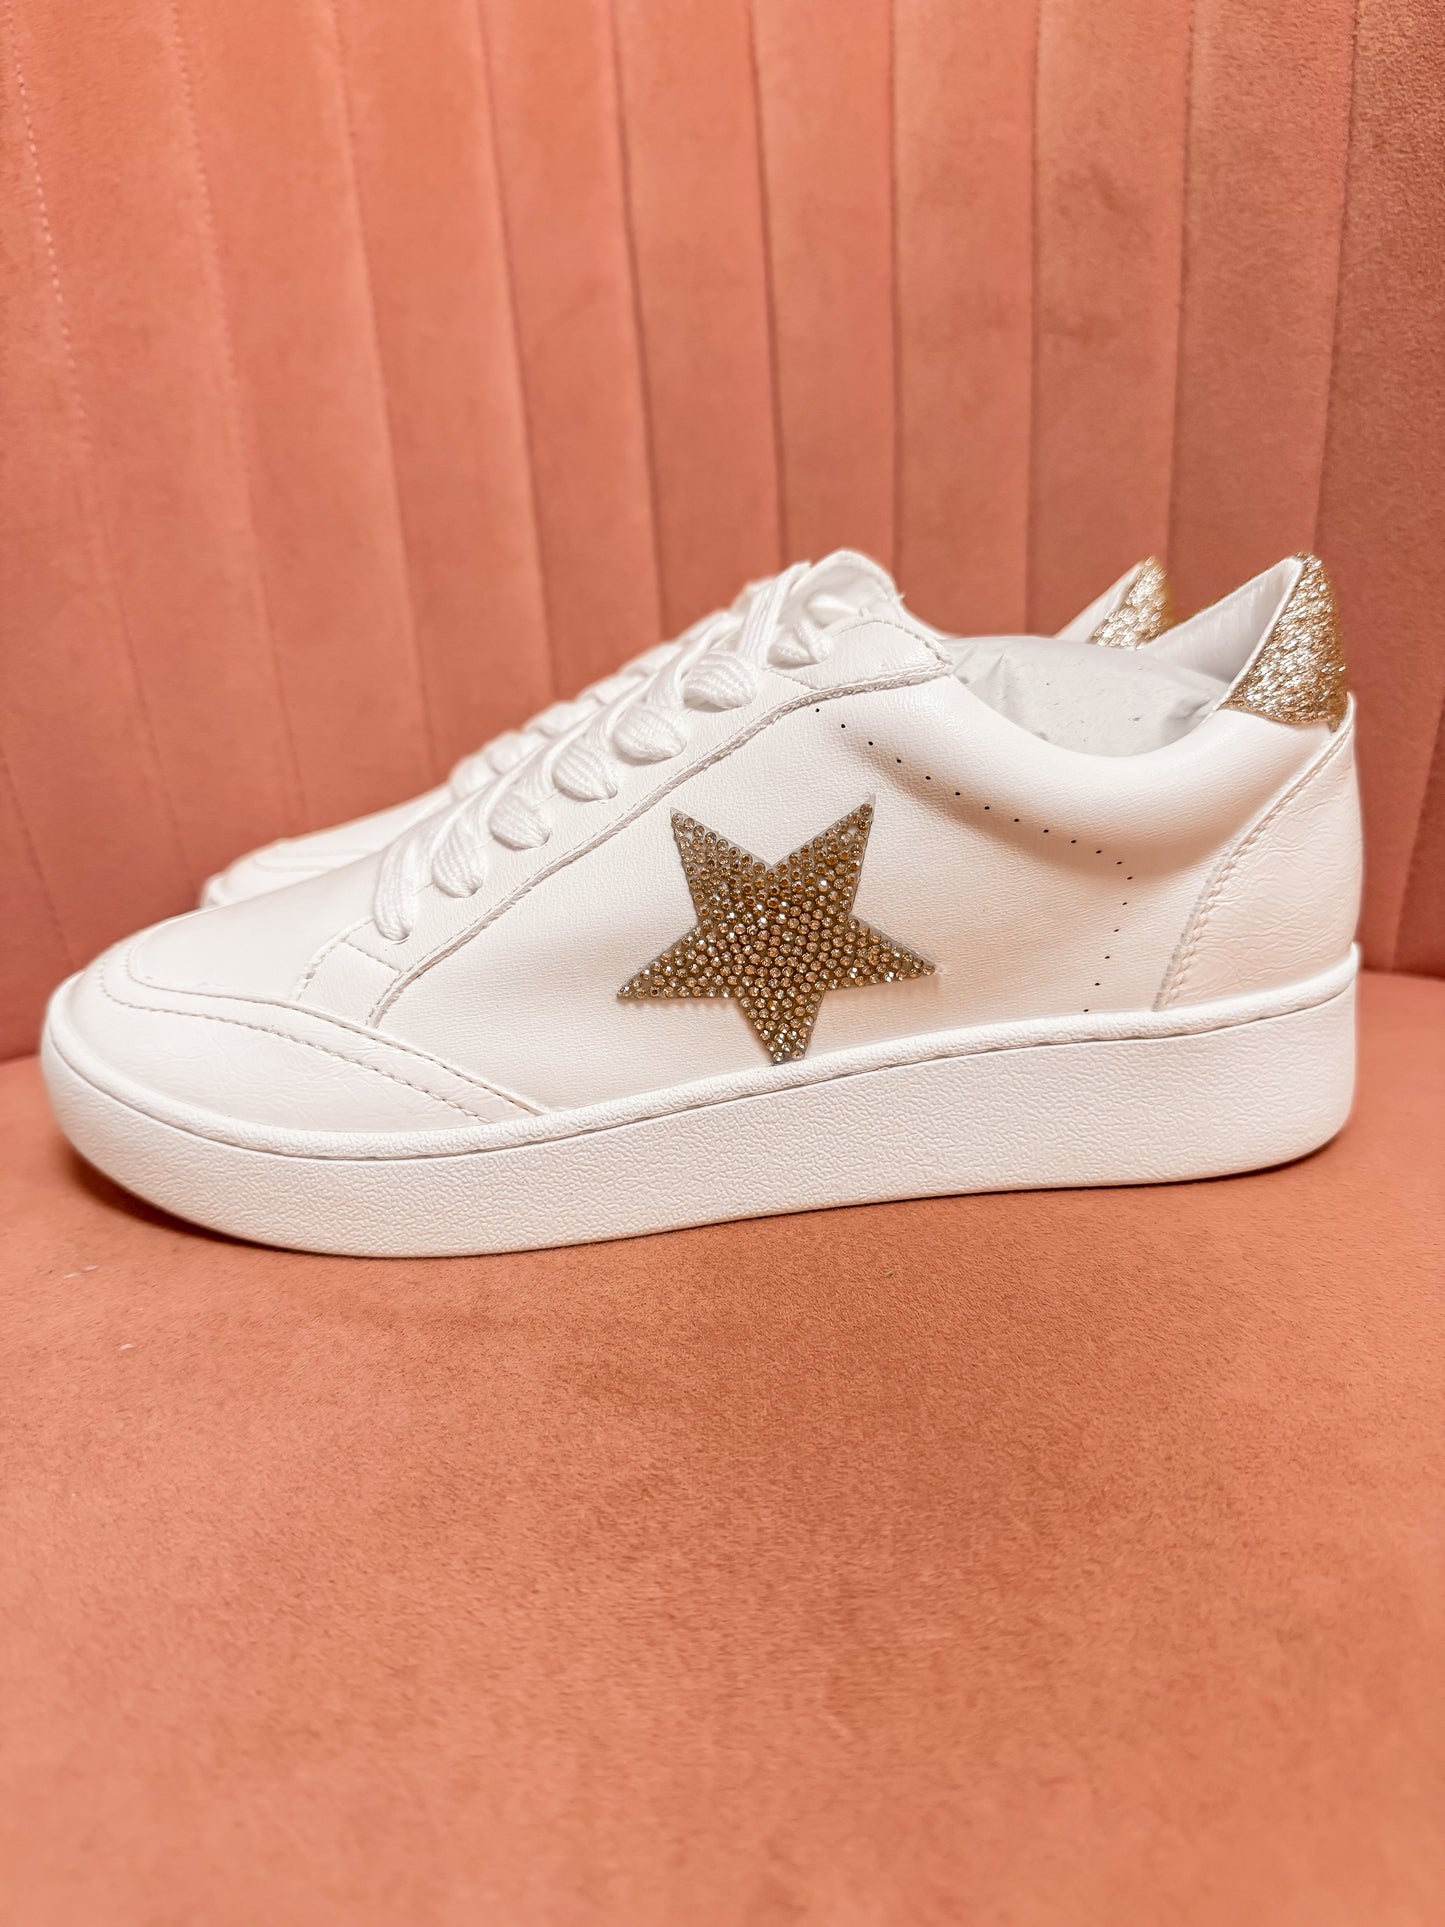 You're a Star Sneaker